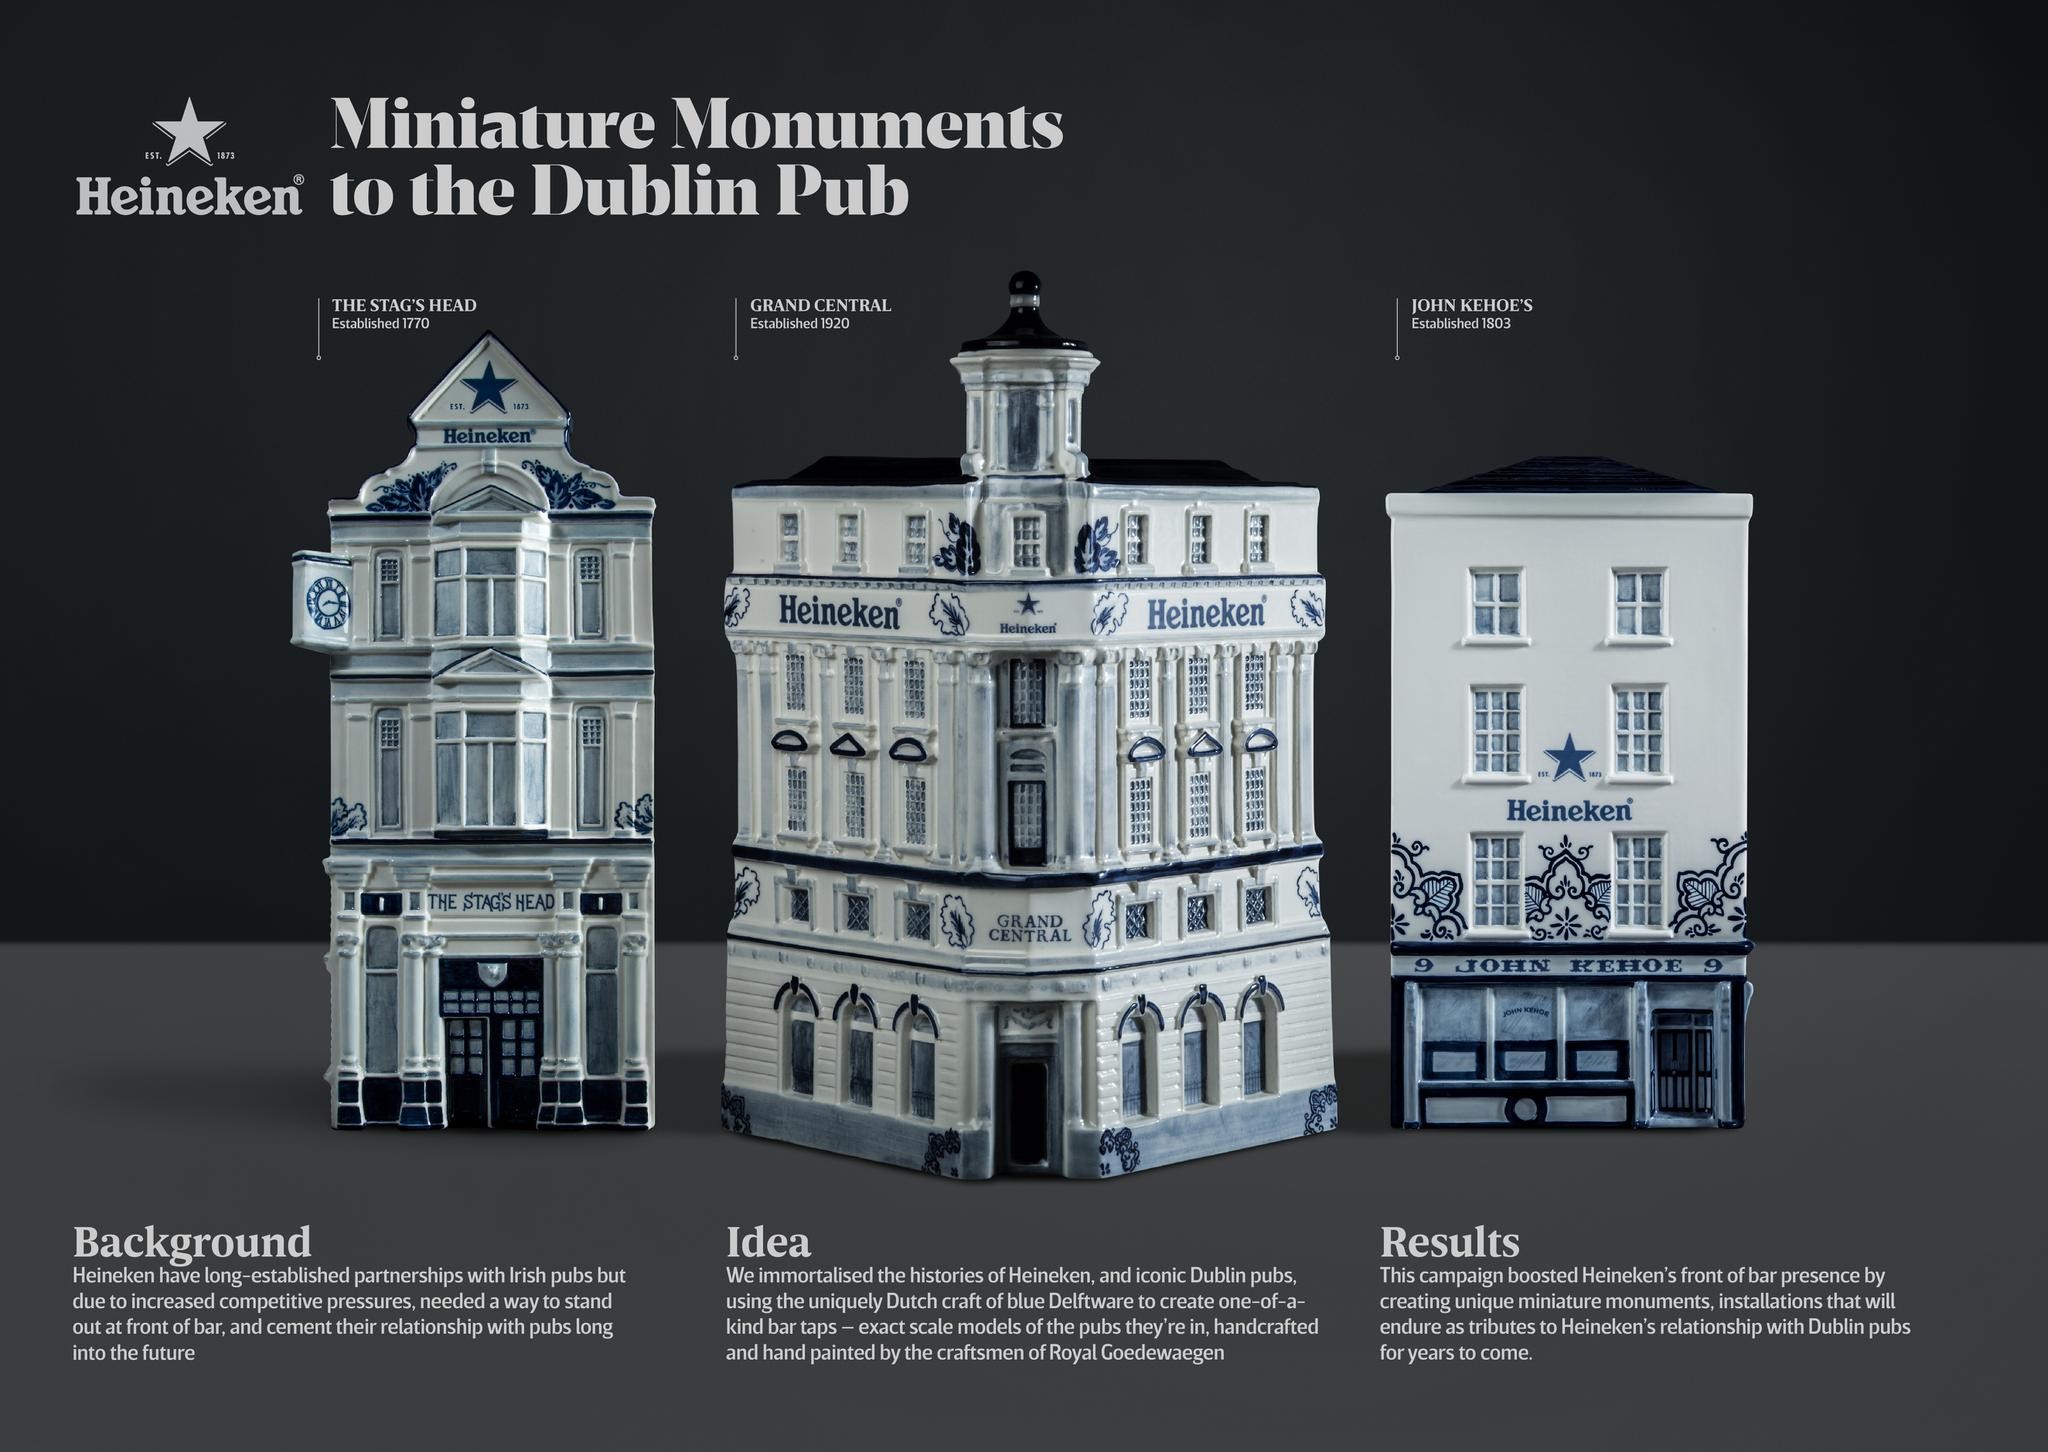 Miniature Monuments to the Dublin Pub